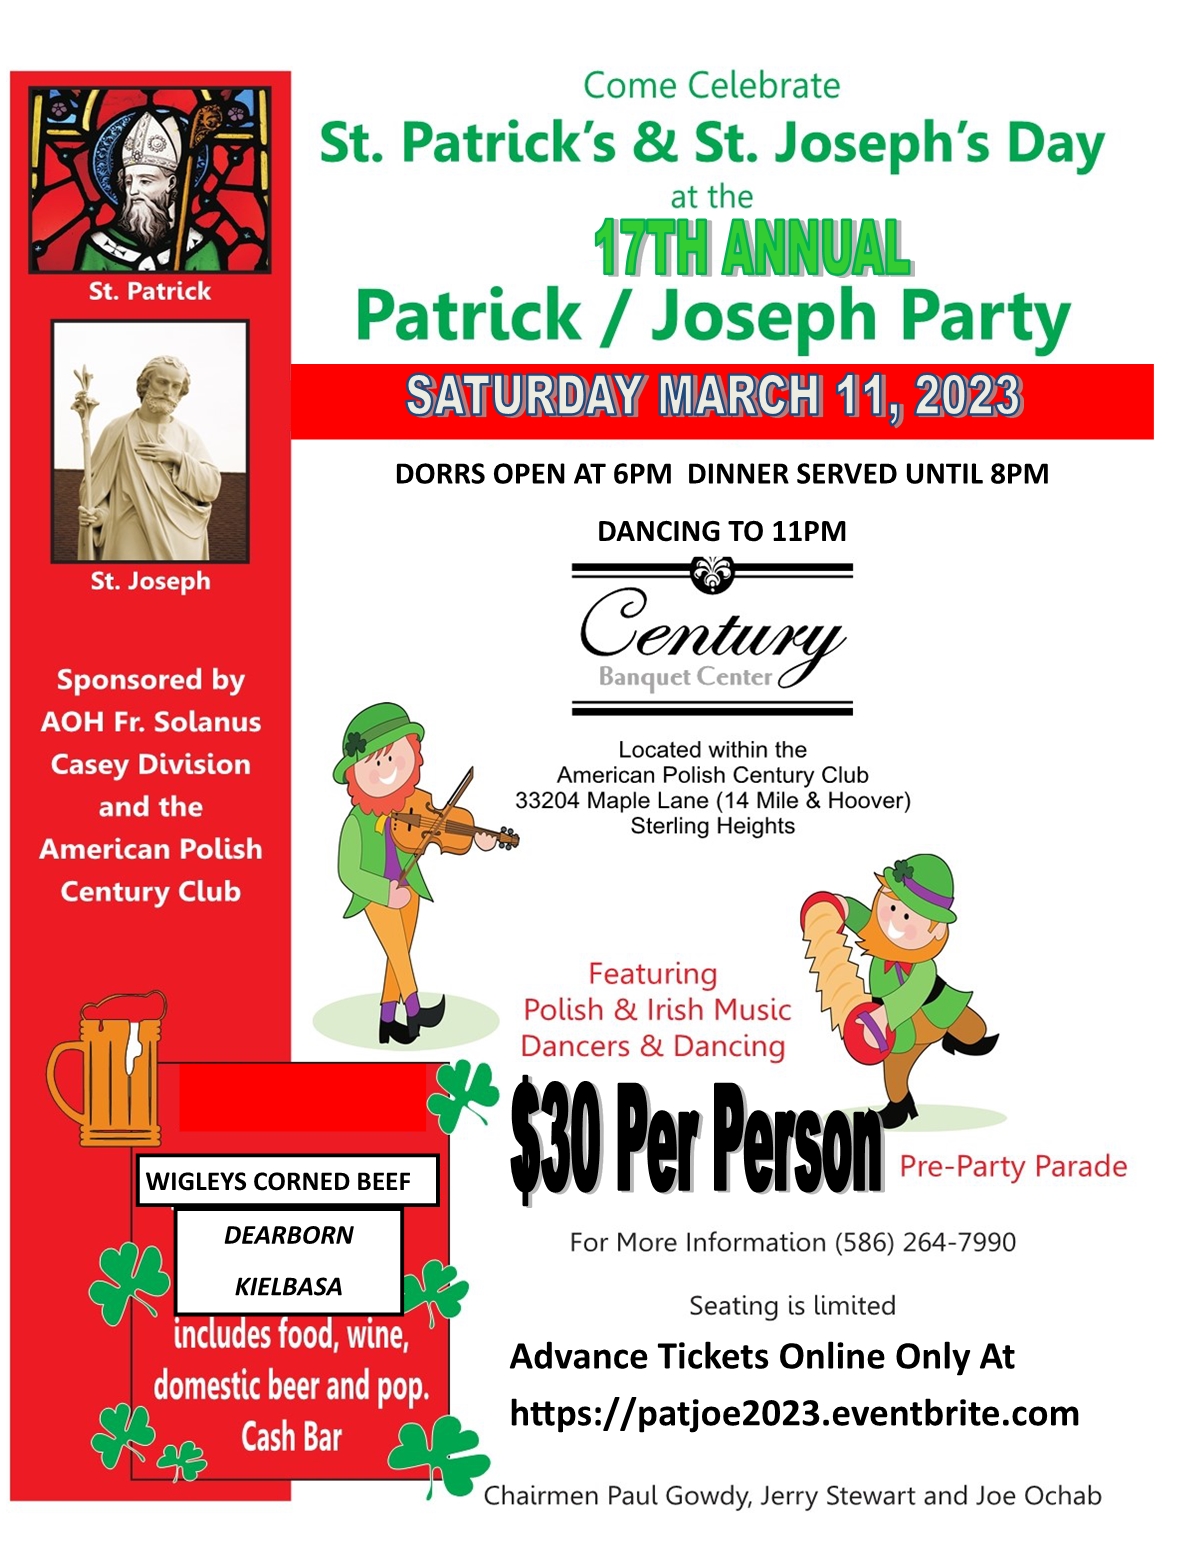 St. Patricks / St. Josephs Day 17th Annual Party